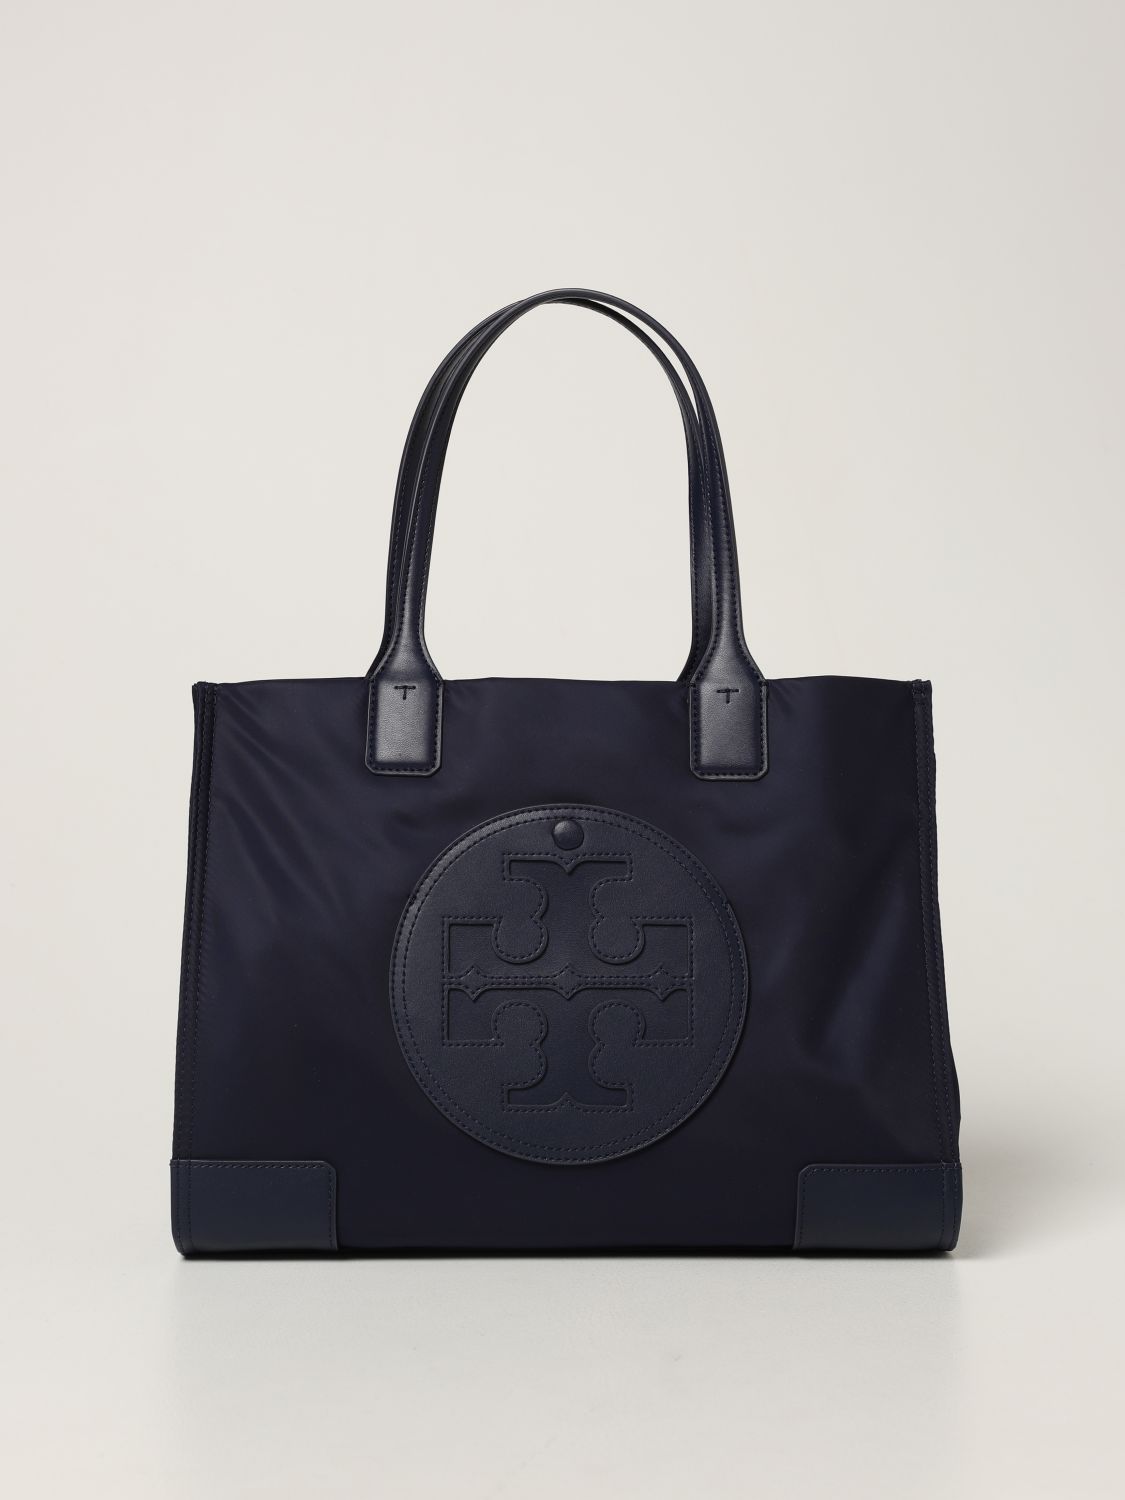 TORY BURCH: Ella Tote nylon bag with emblem - Blue | Tory Burch tote ...